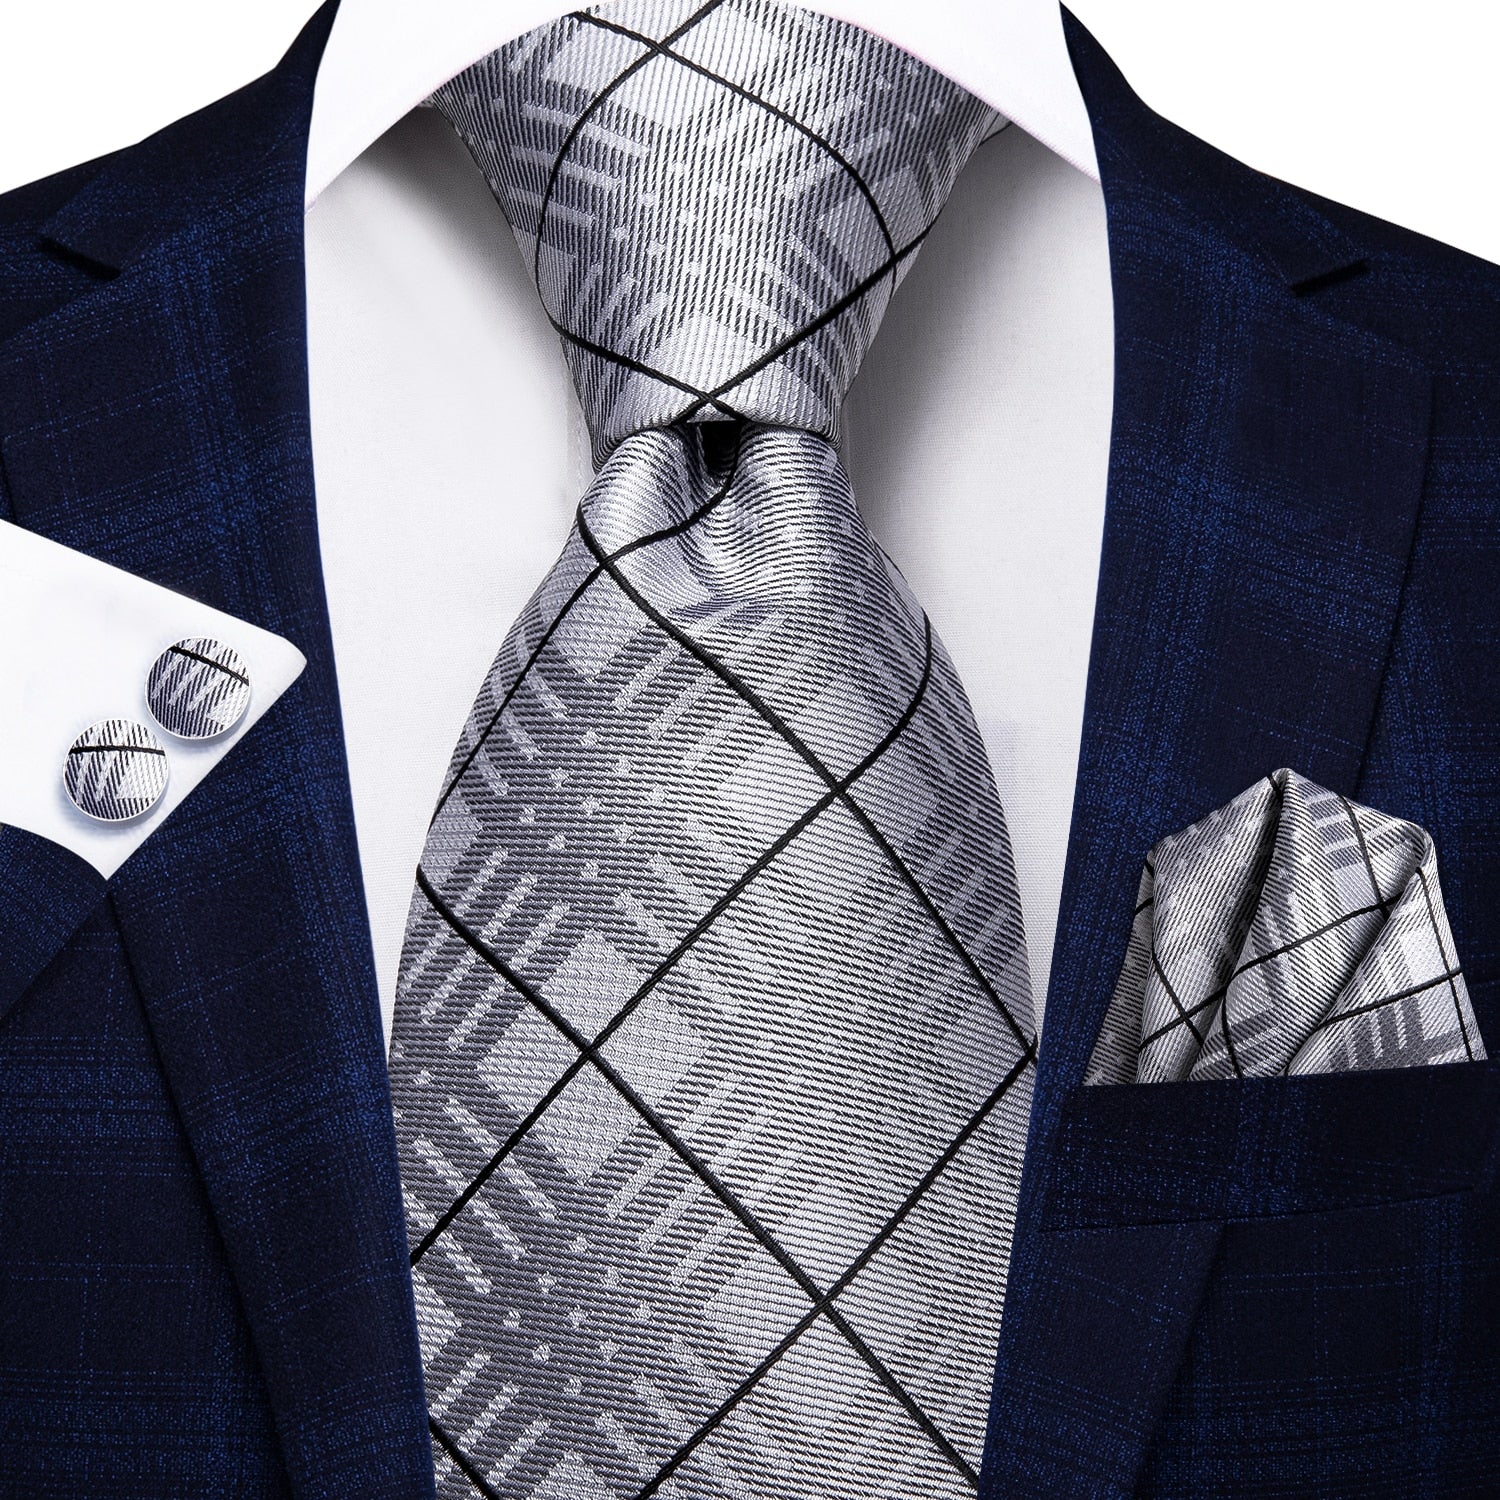 3 Piece Business Classic Blue Black Striped Solid Neck Tie Necktie Pocket Square Cufflinks Wedding Party Silk Tie Set The Clothing Company Sydney